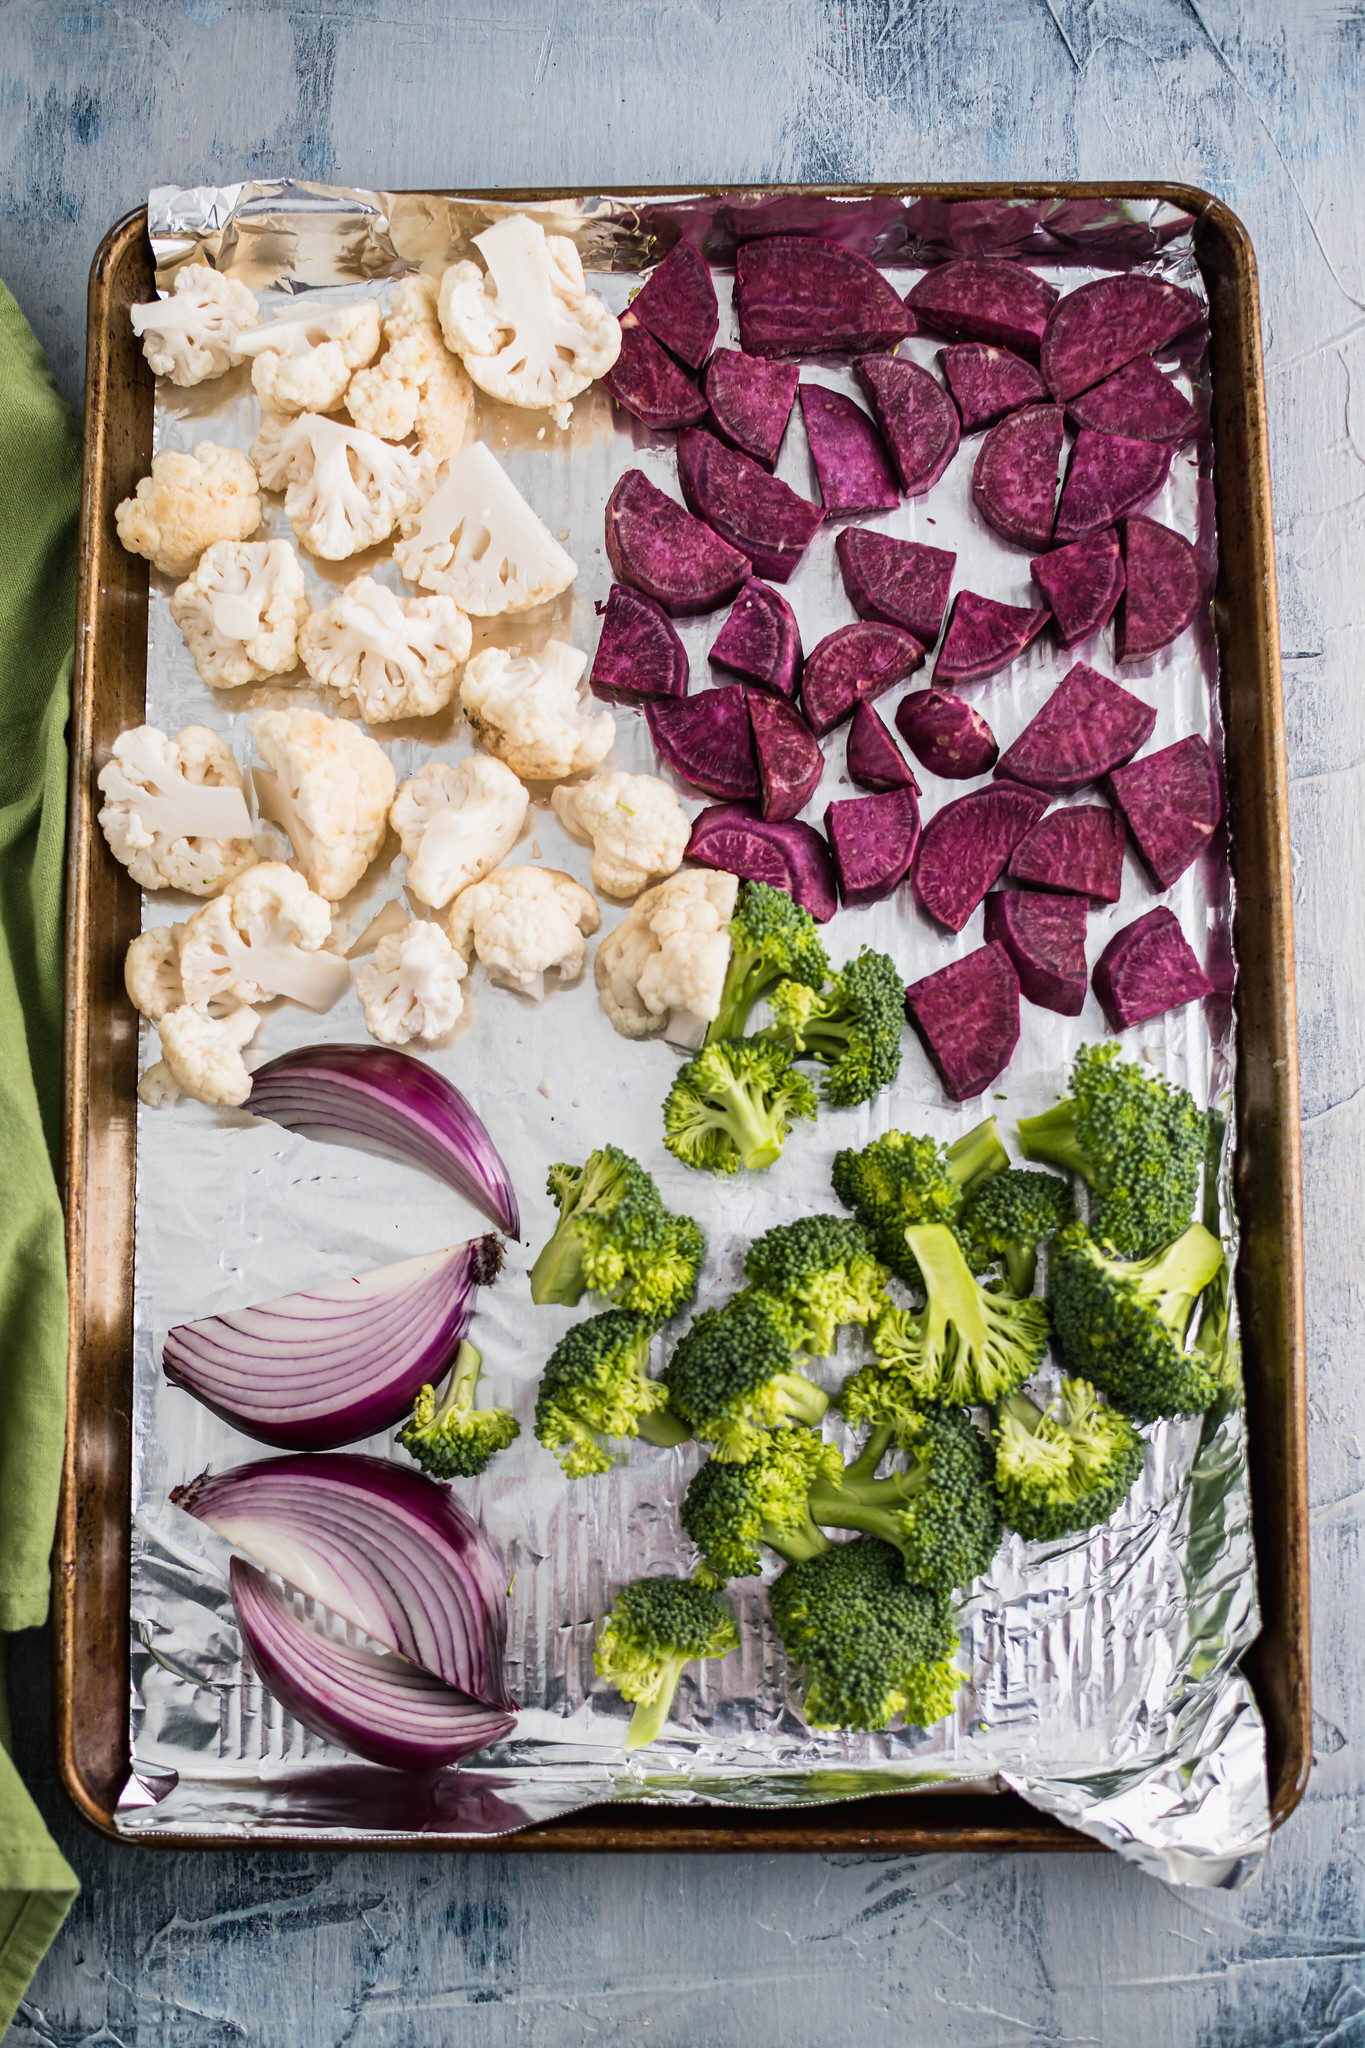 Broccoli, caulilower, chopped purple sweet potatoes and red onion on a foil lined baking sheet.